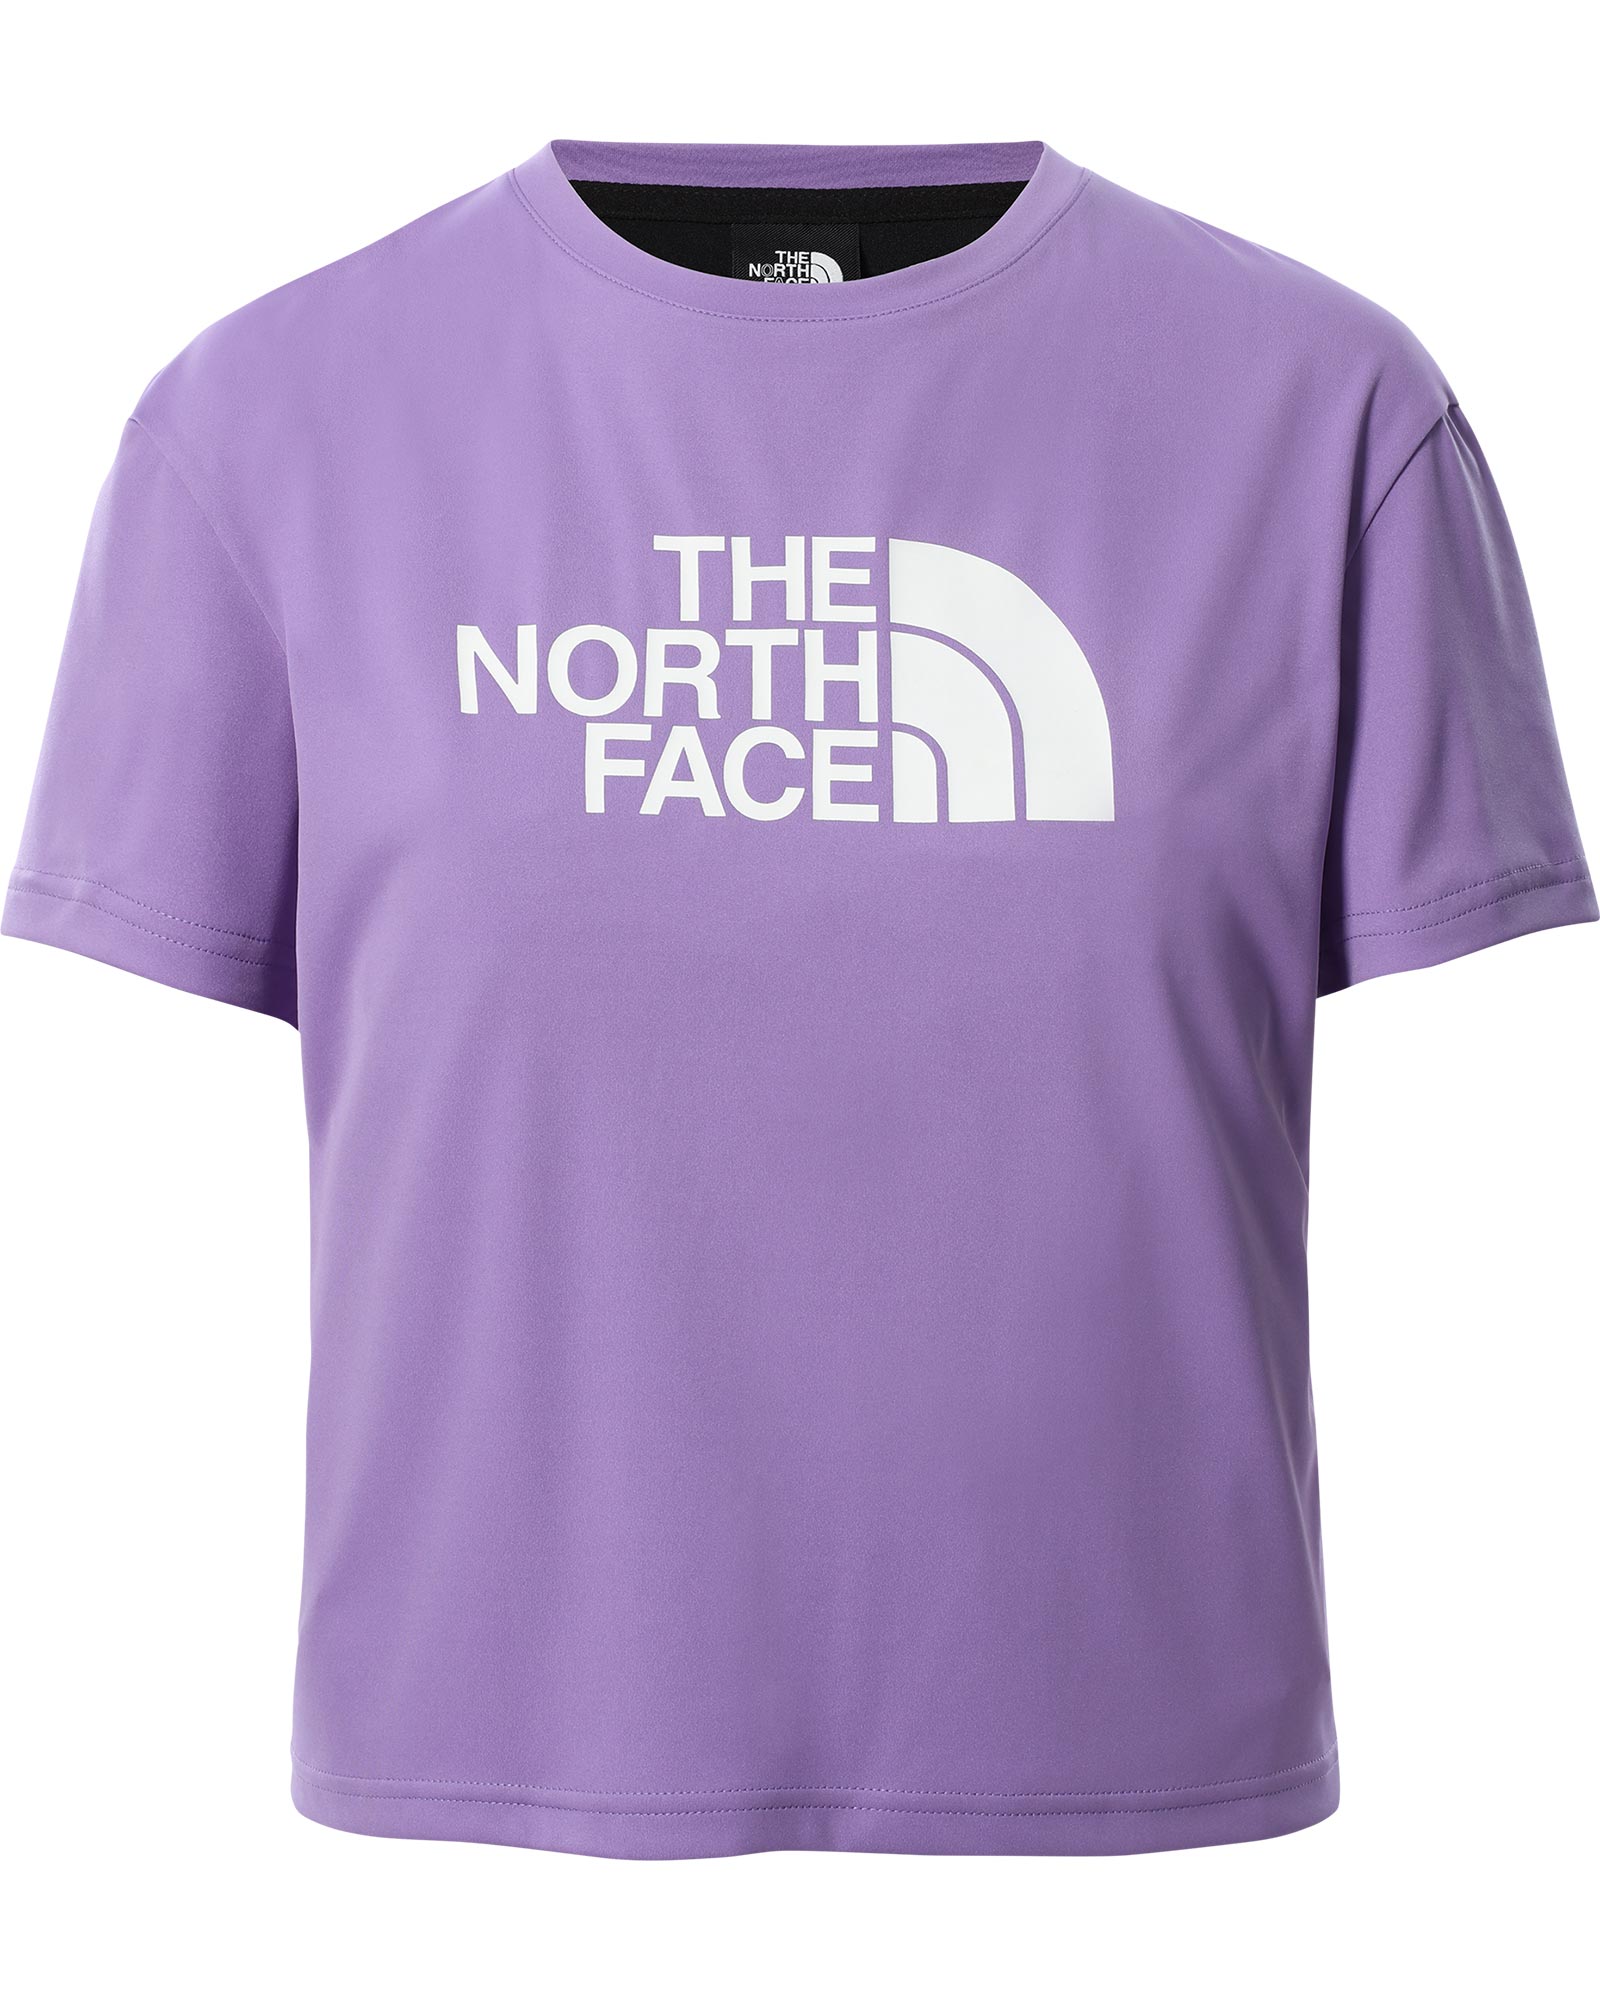 The North Face MA Women’s T Shirt - Pop Purple L